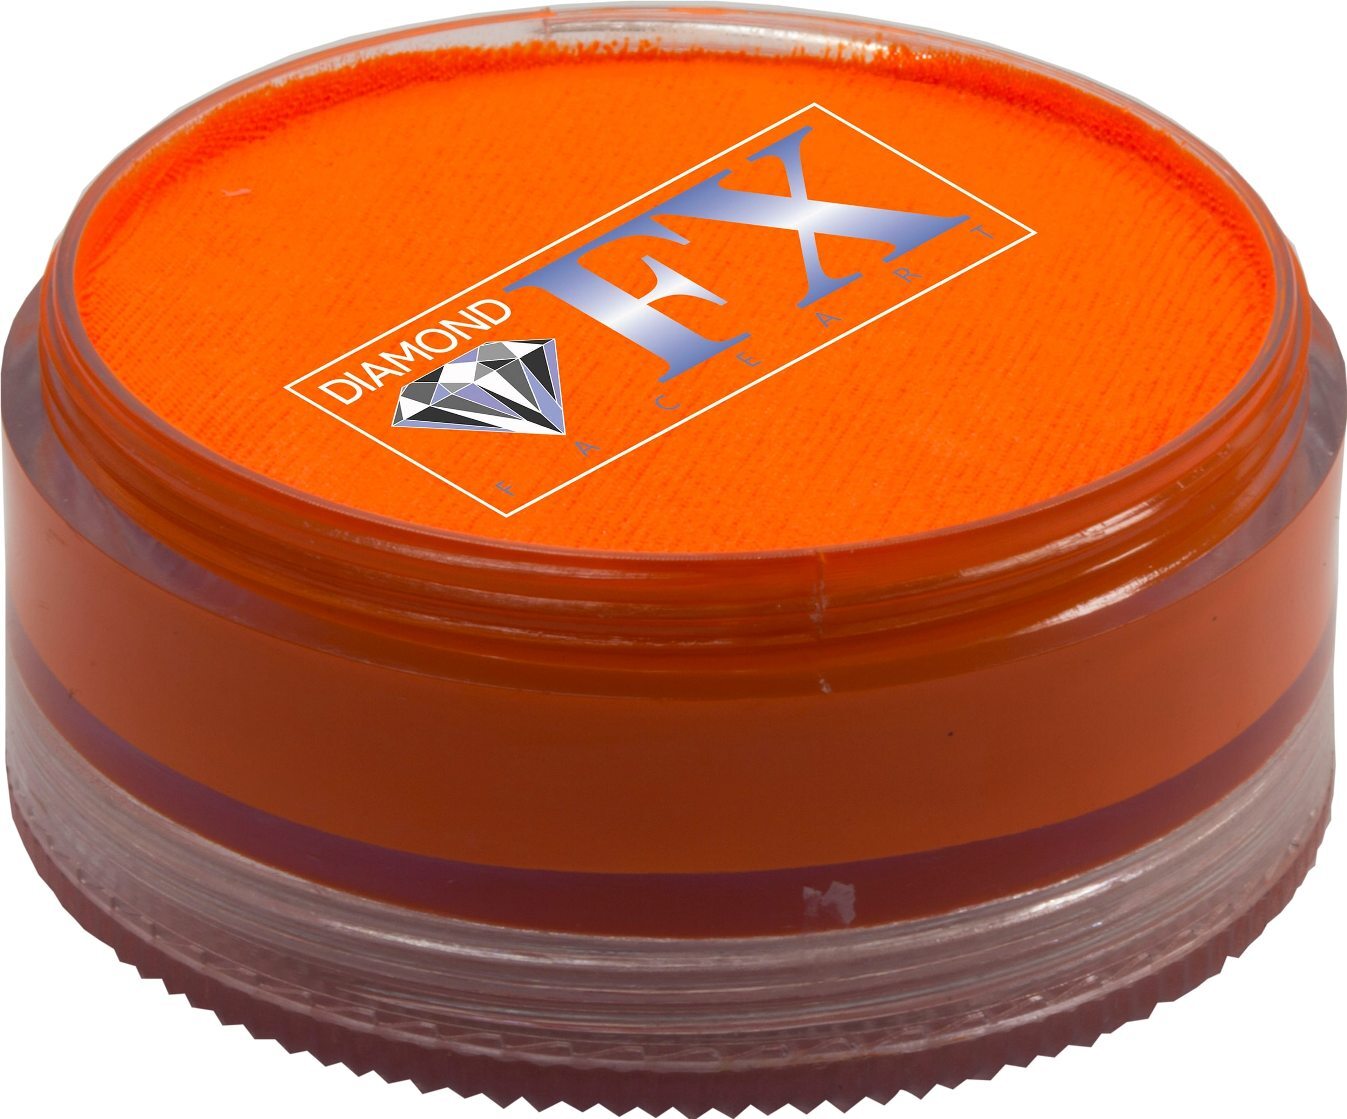 Diamond FX Orange Neon 90g - Small Image